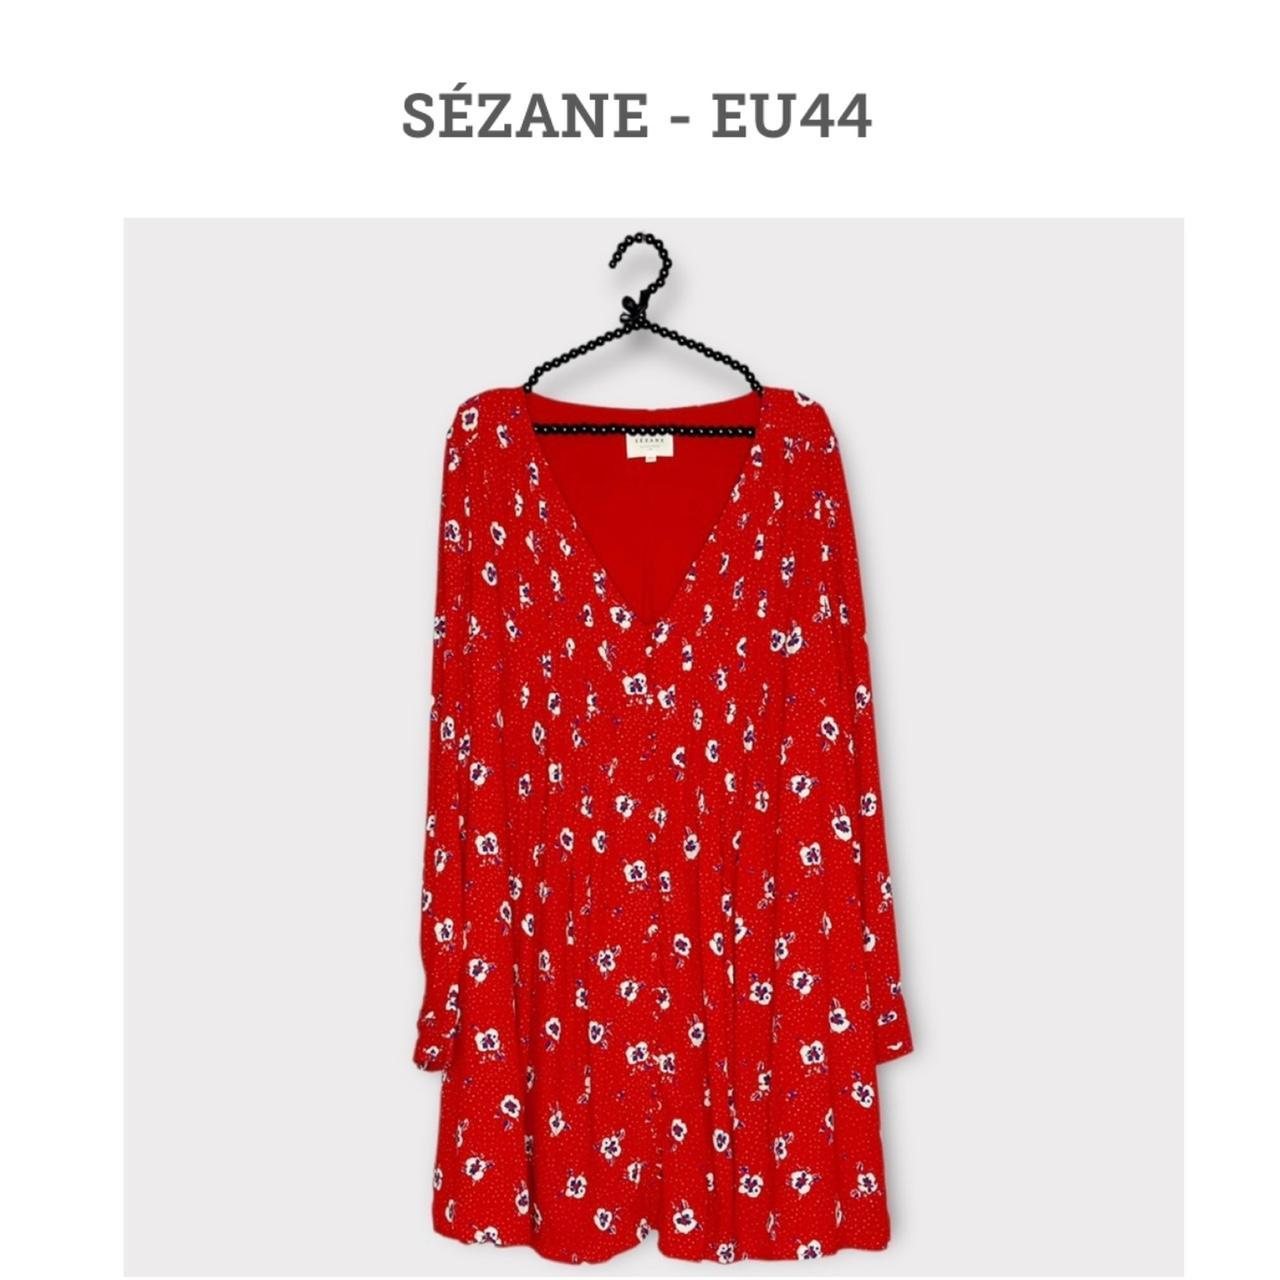 Sézane Women's Red Dress